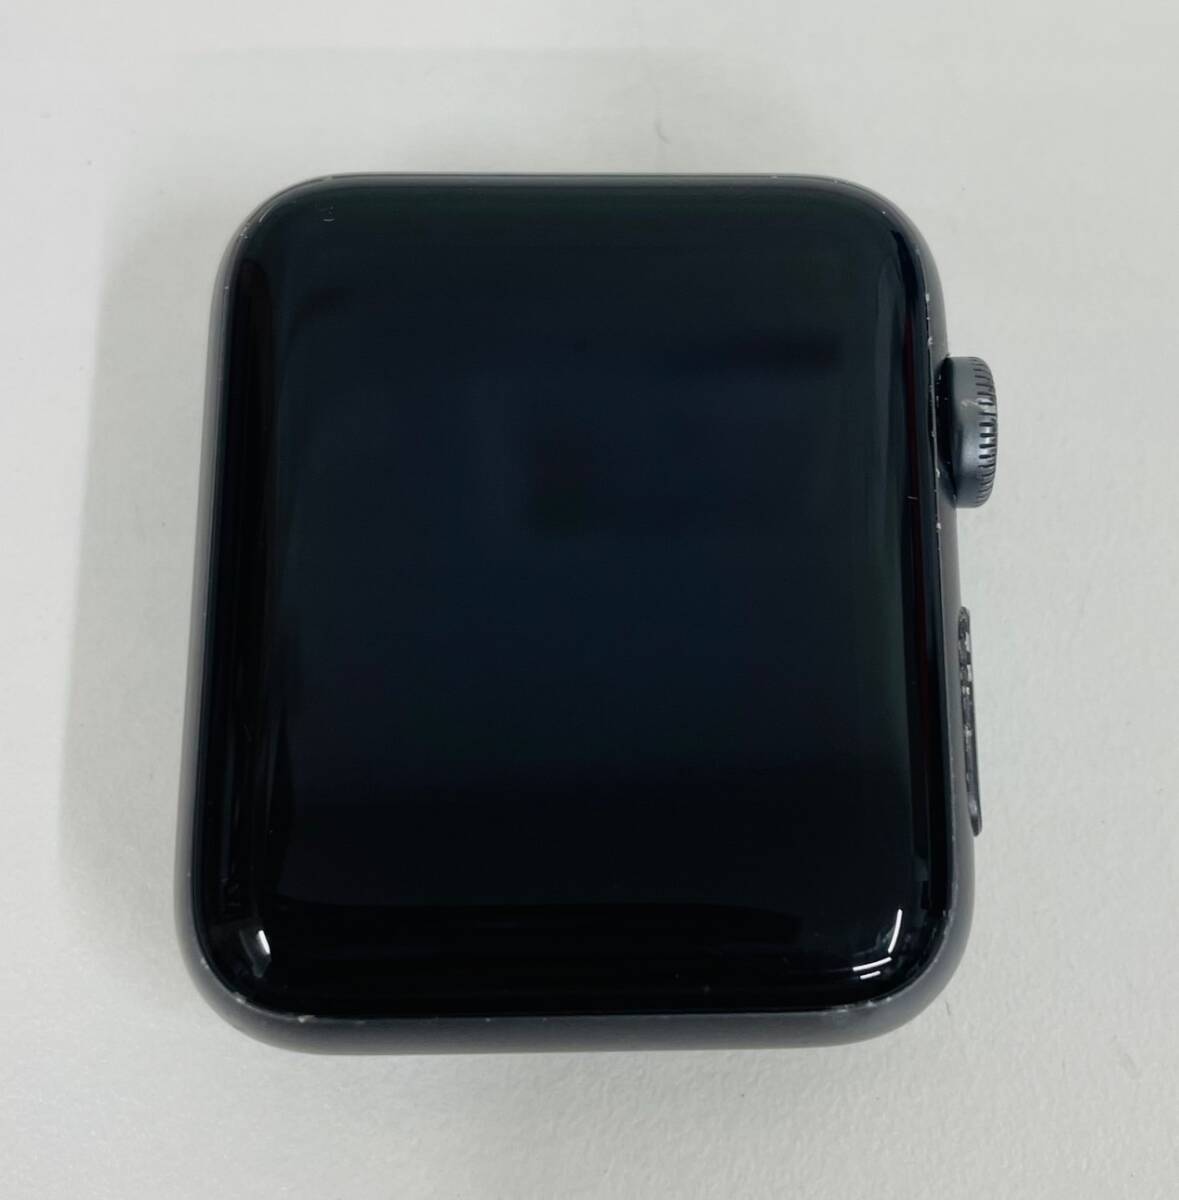 [TK12143KM]1 jpy start Apple AppleWatch series 3 42mm body only electrification not yet verification Junk parts .. smart watch 